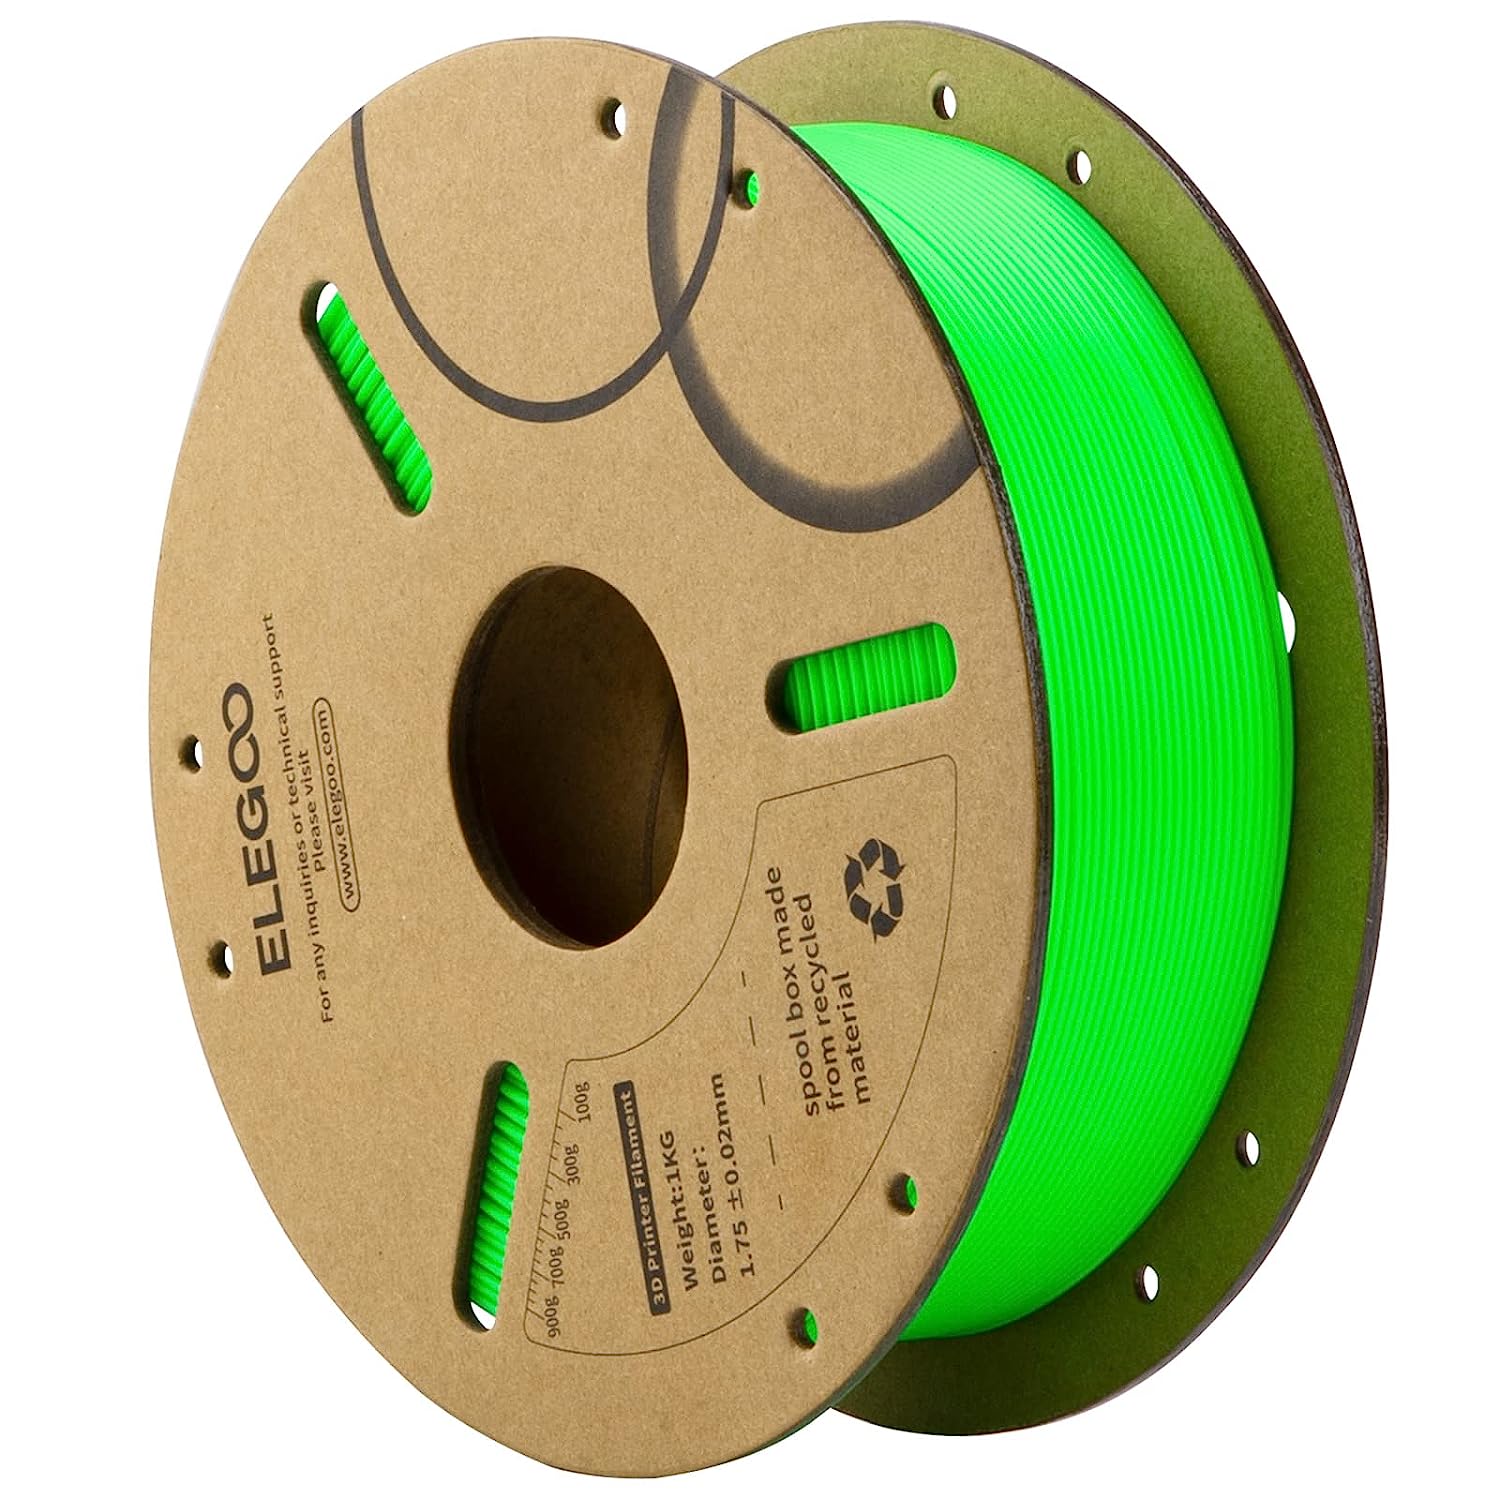 ELEGOO PLA Filament 1.75mm 3D Printer Filament 1Kg Cardboard Spool - Green